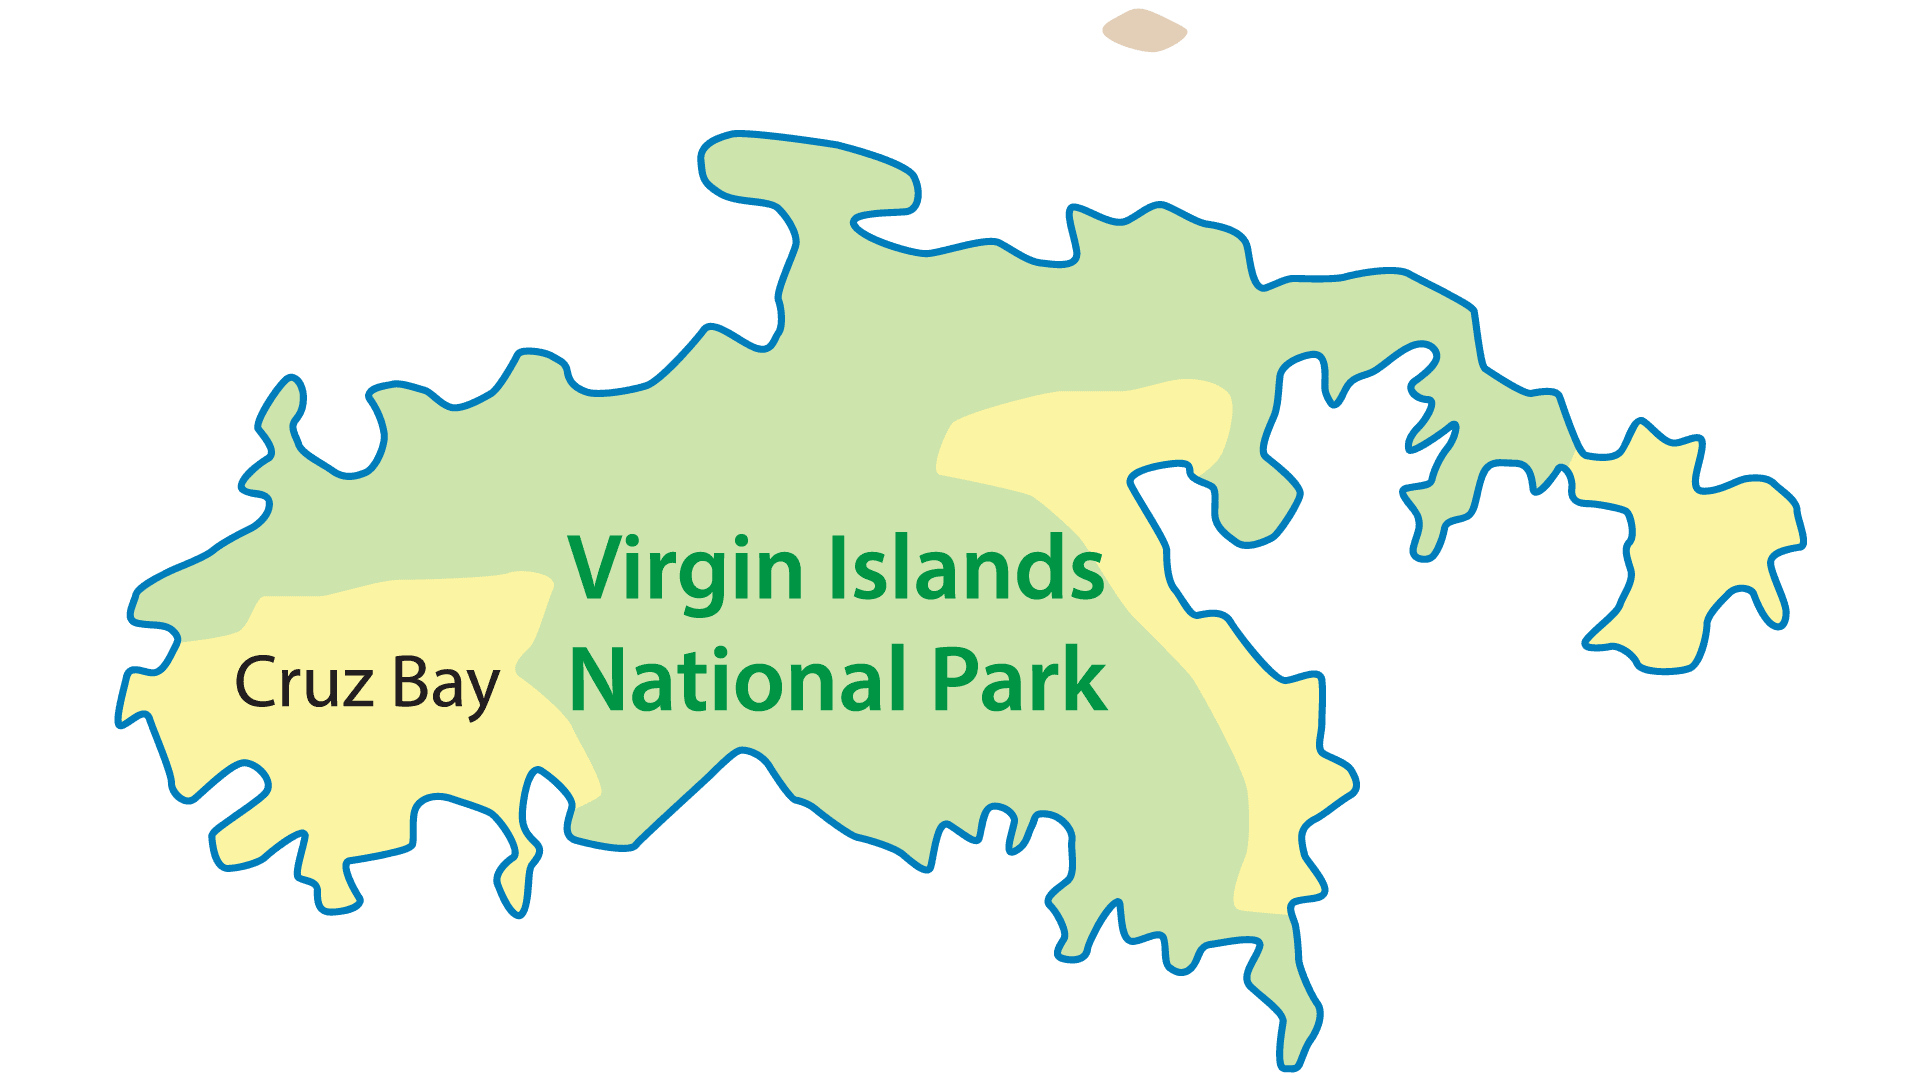 Map rendering of St John island